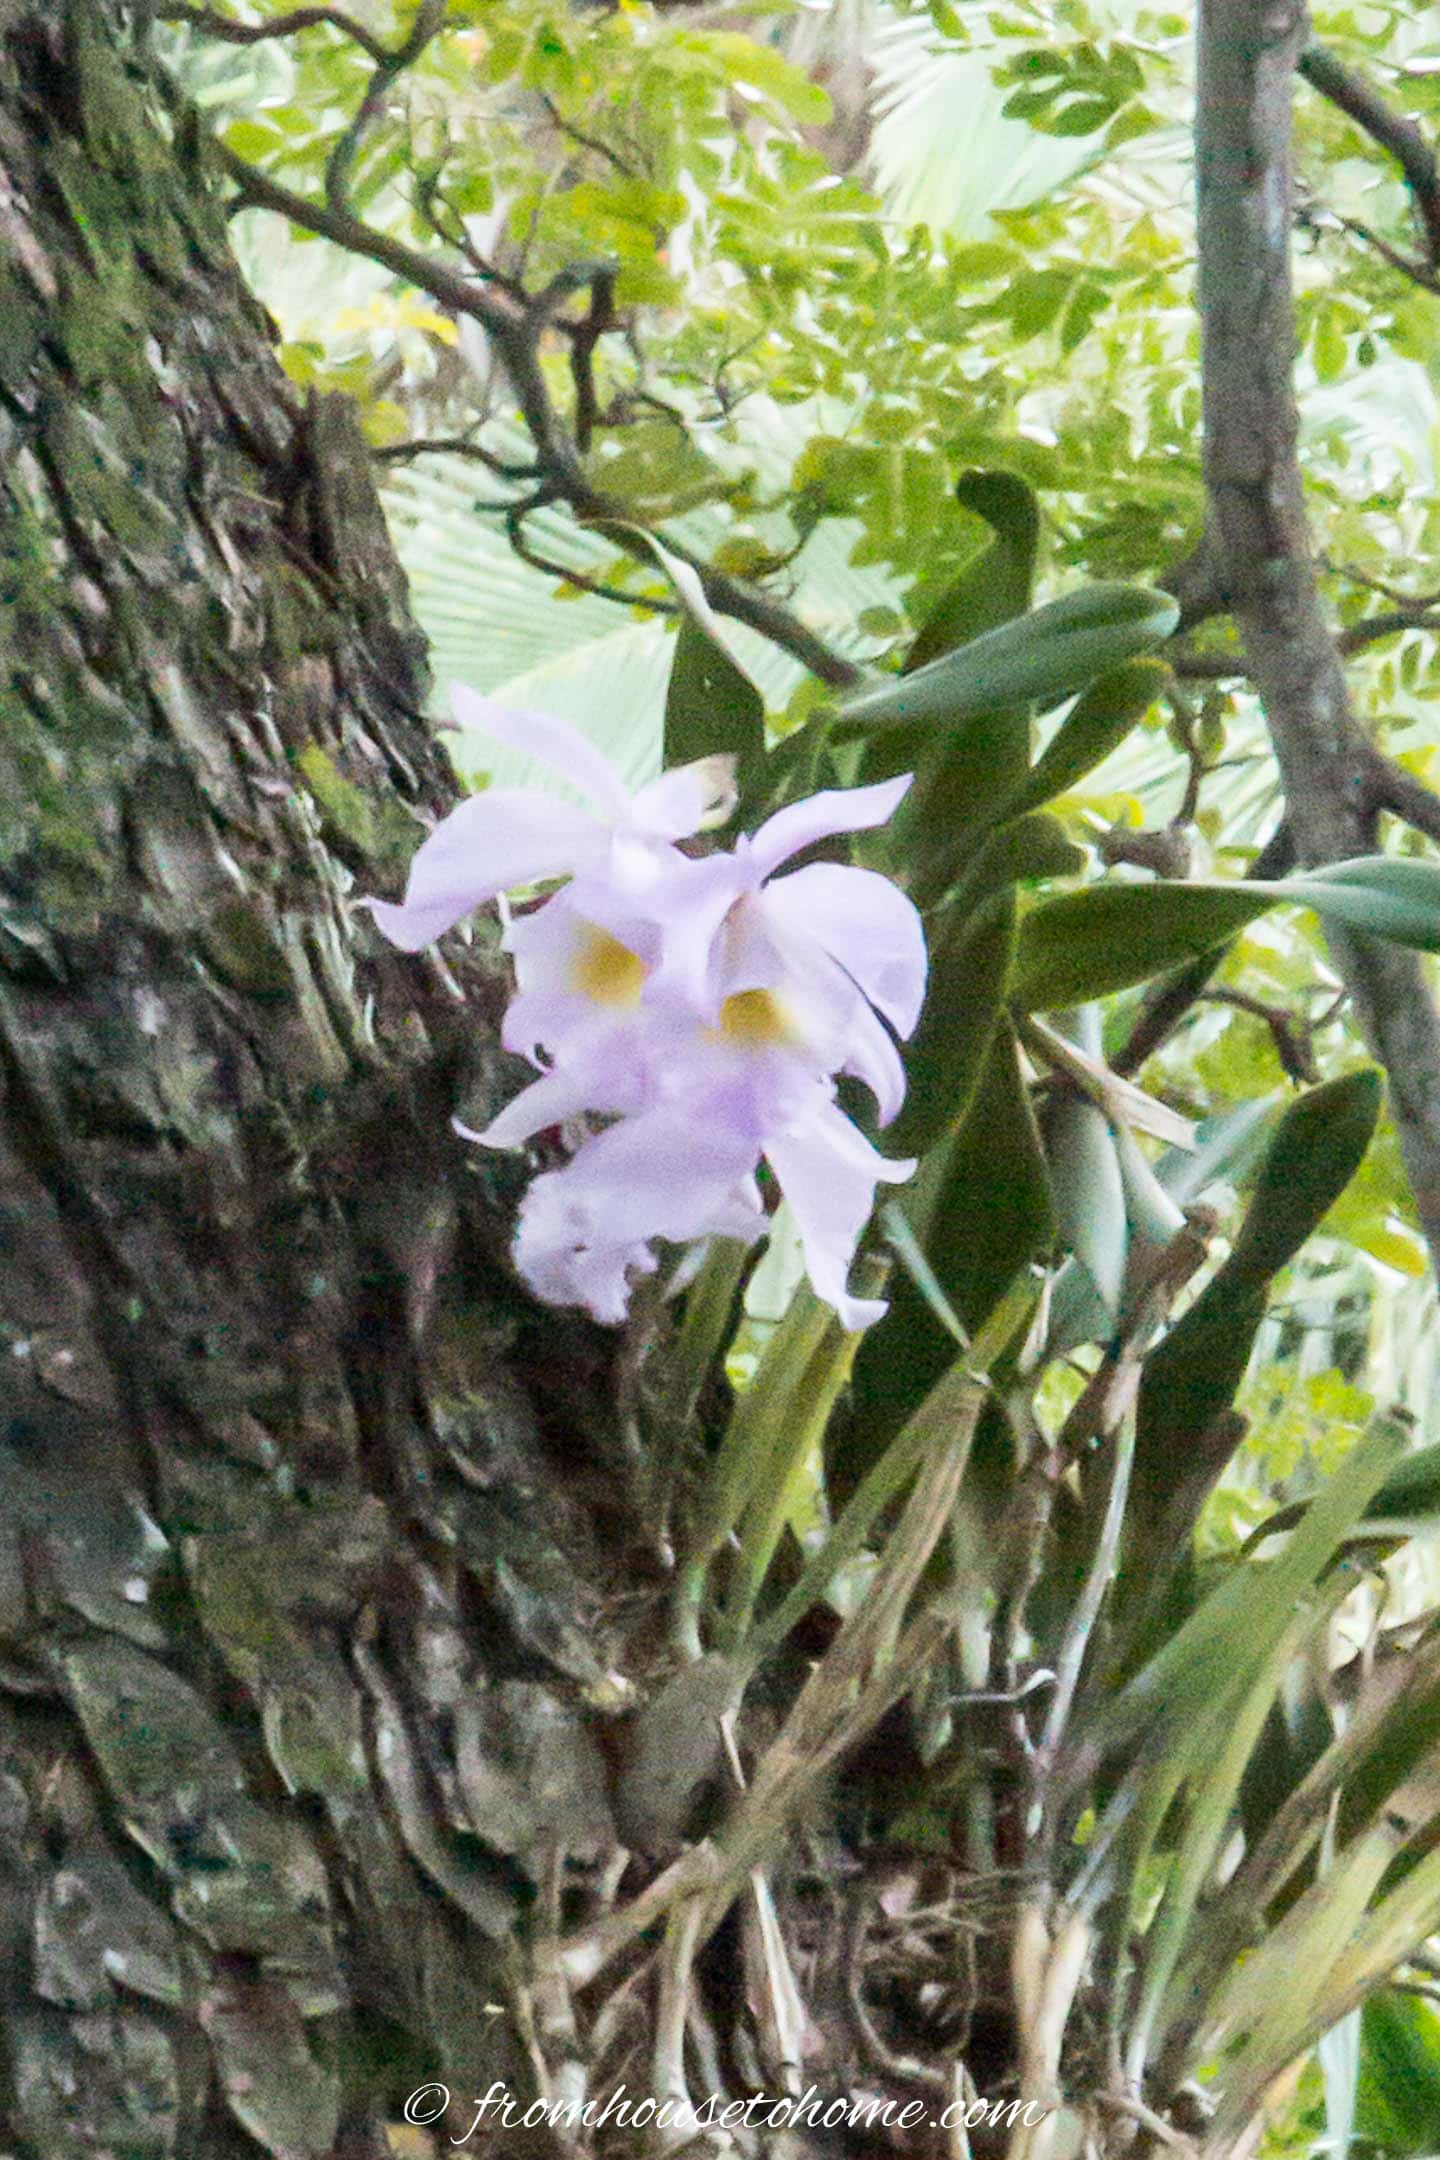 Orchids growing wild on a tree in Kauai, Hawaii